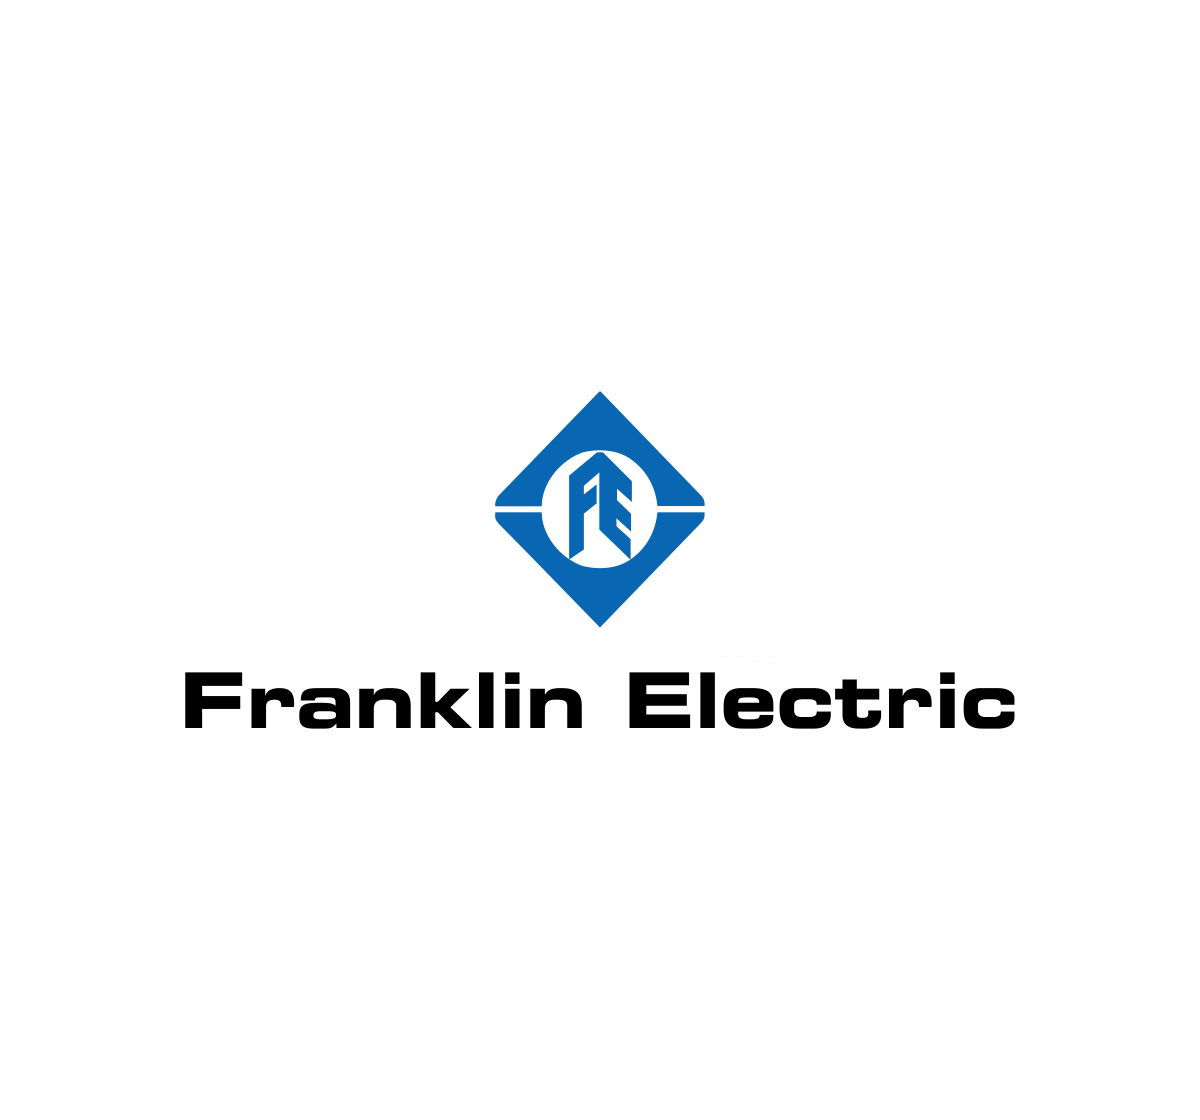 Franklin Electric - Rolo & Pereira